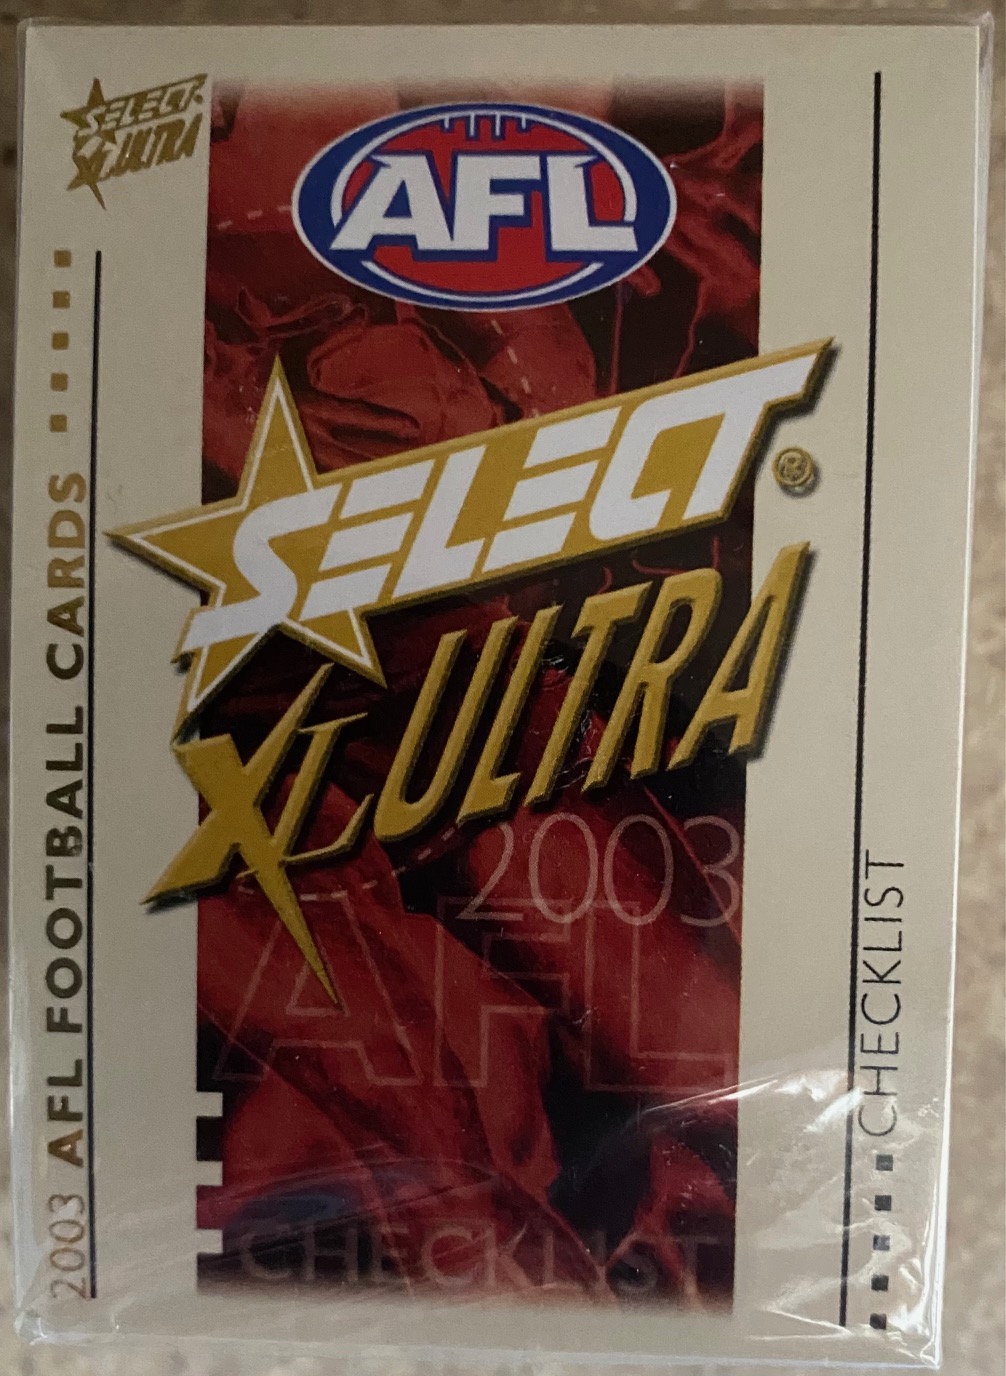 2003 Select XL Ultra Full Base Set (162 Cards)